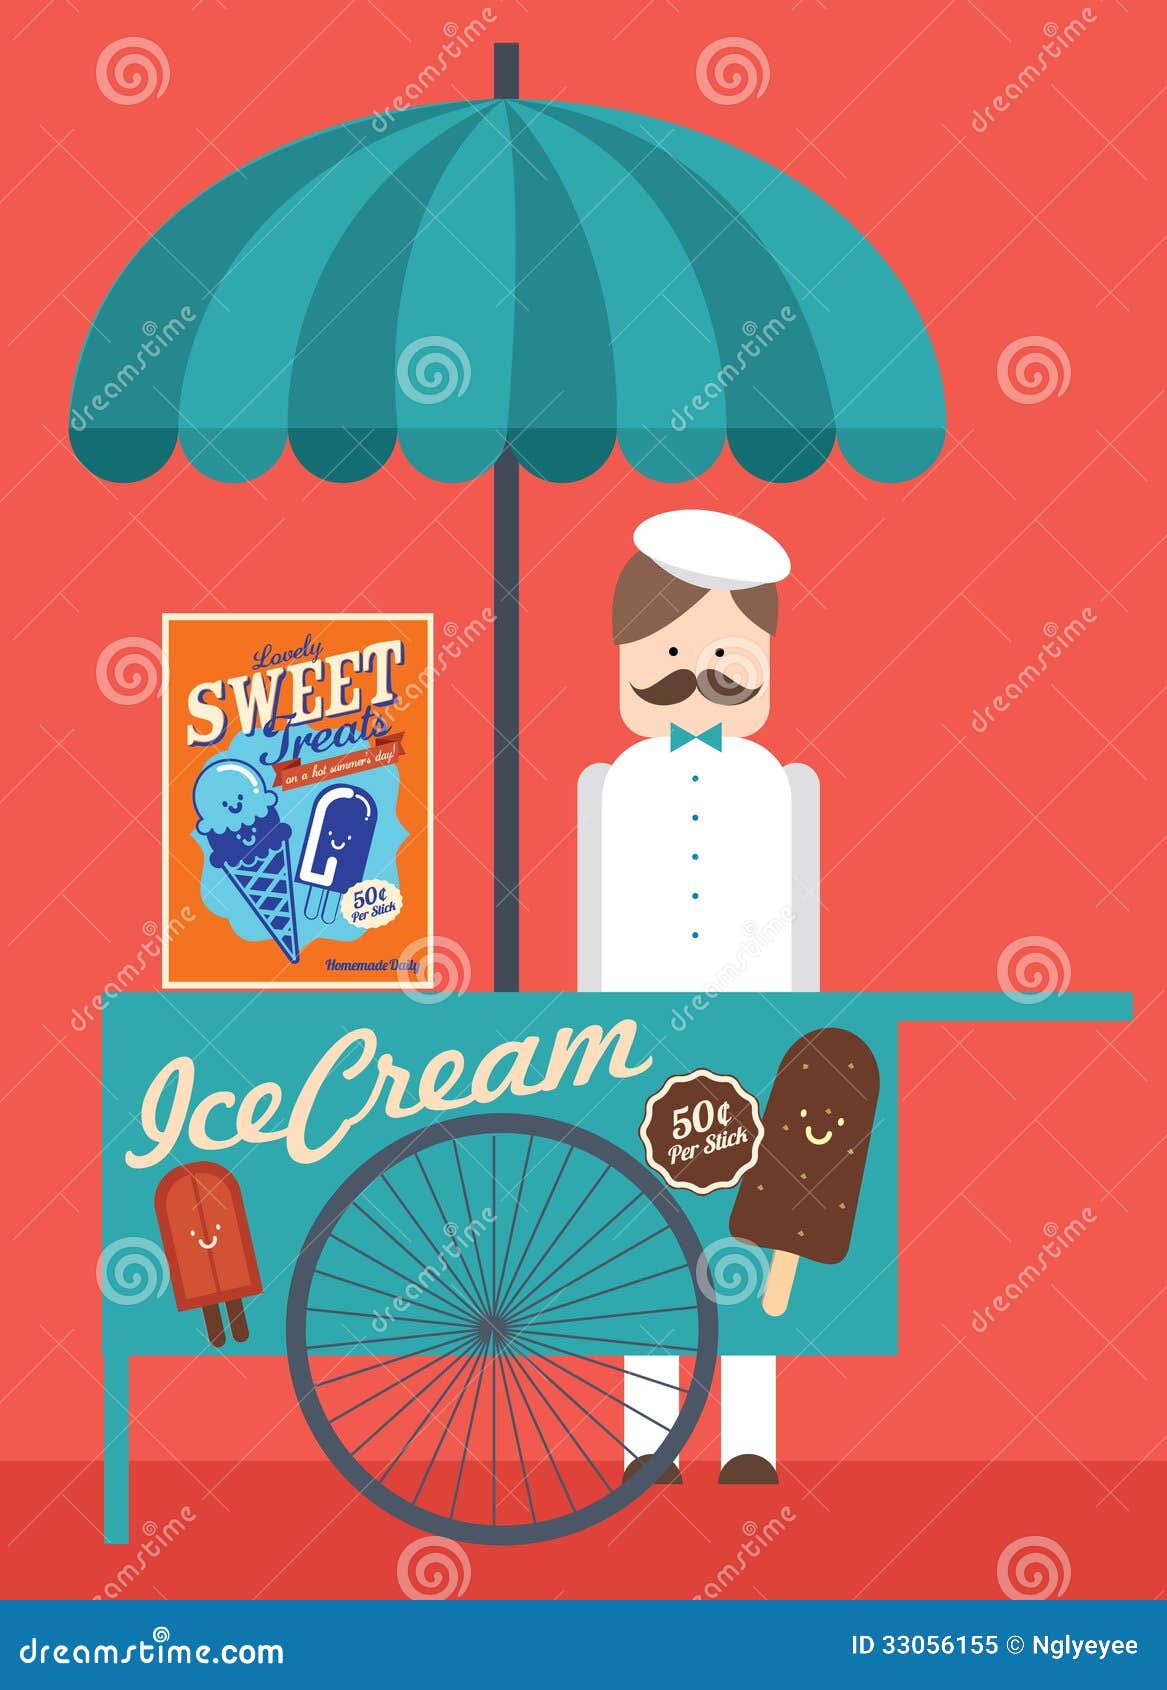 ice cream vendor clipart - photo #35